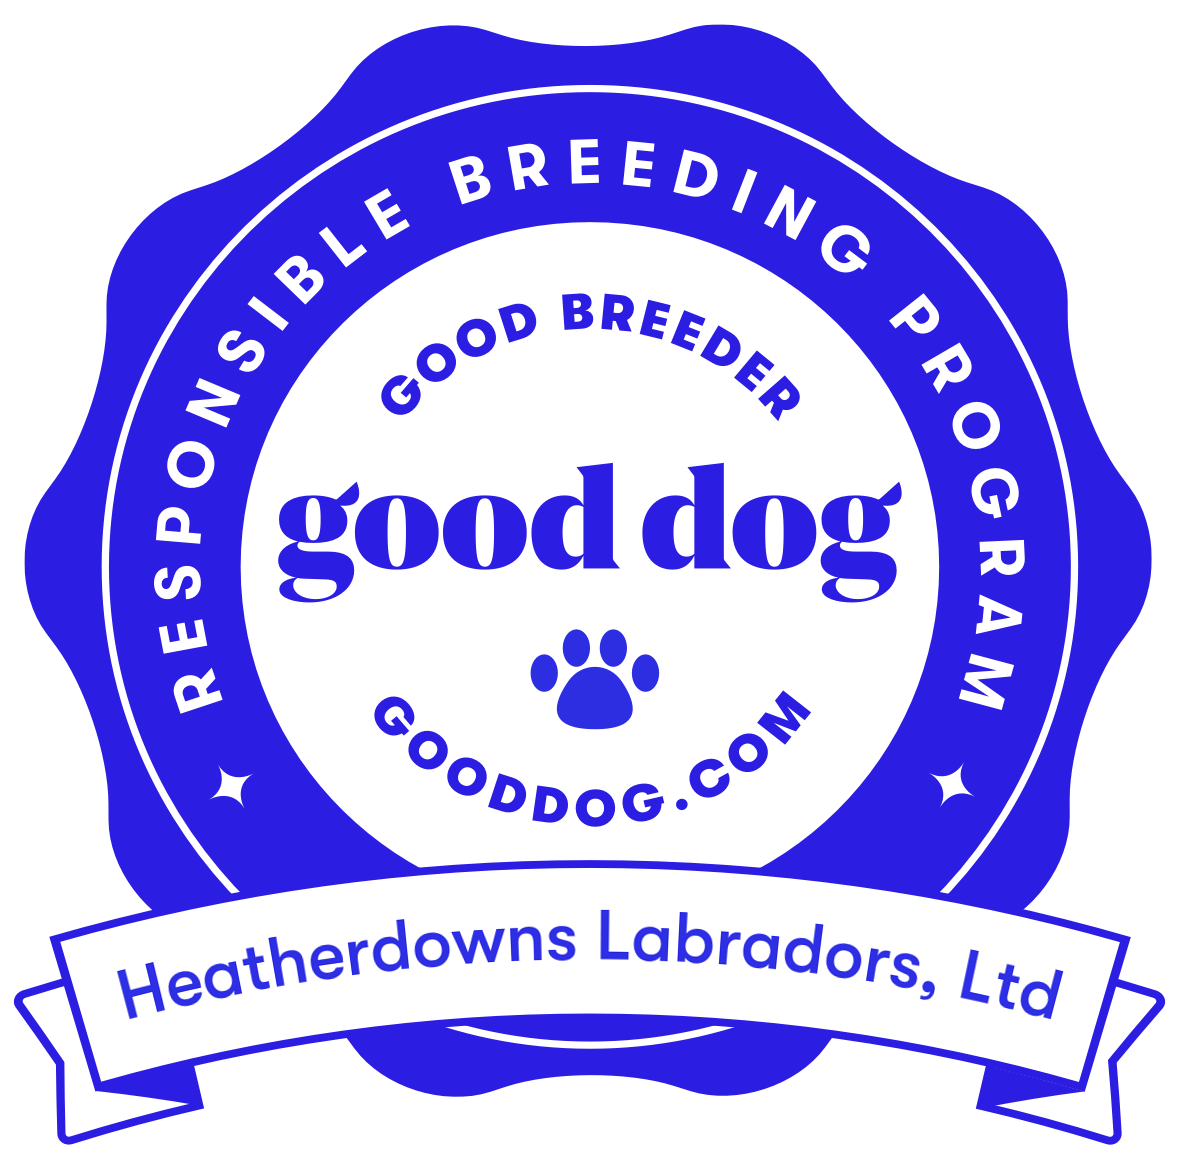 heatherdowns-labradors-ltd-badge(1).png